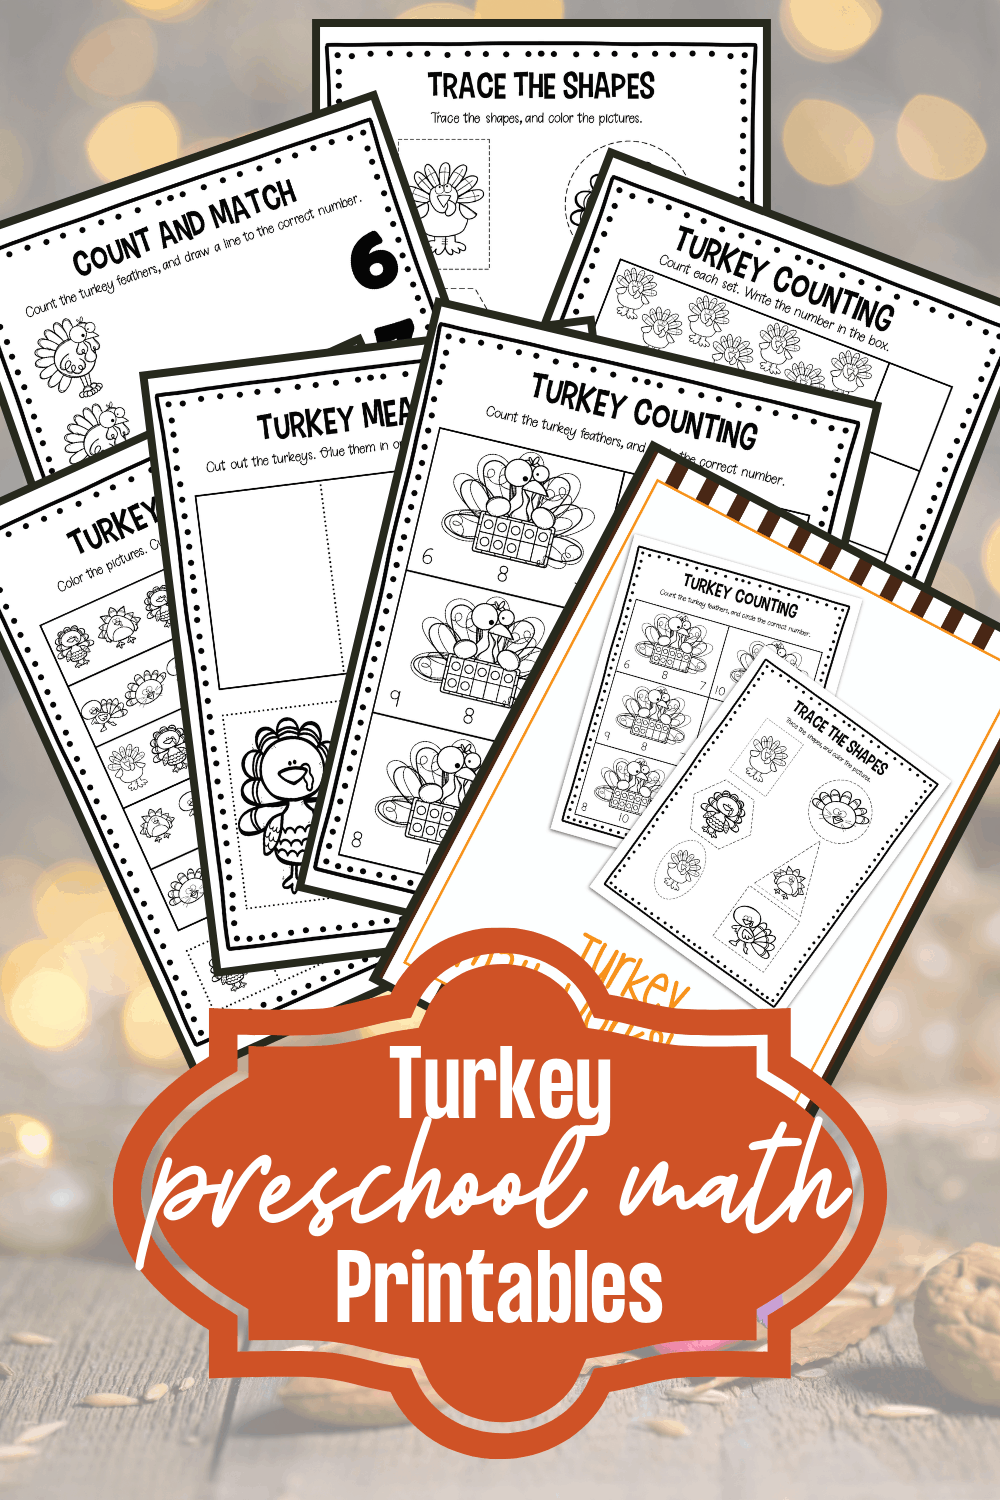 Turkey Math Worksheets